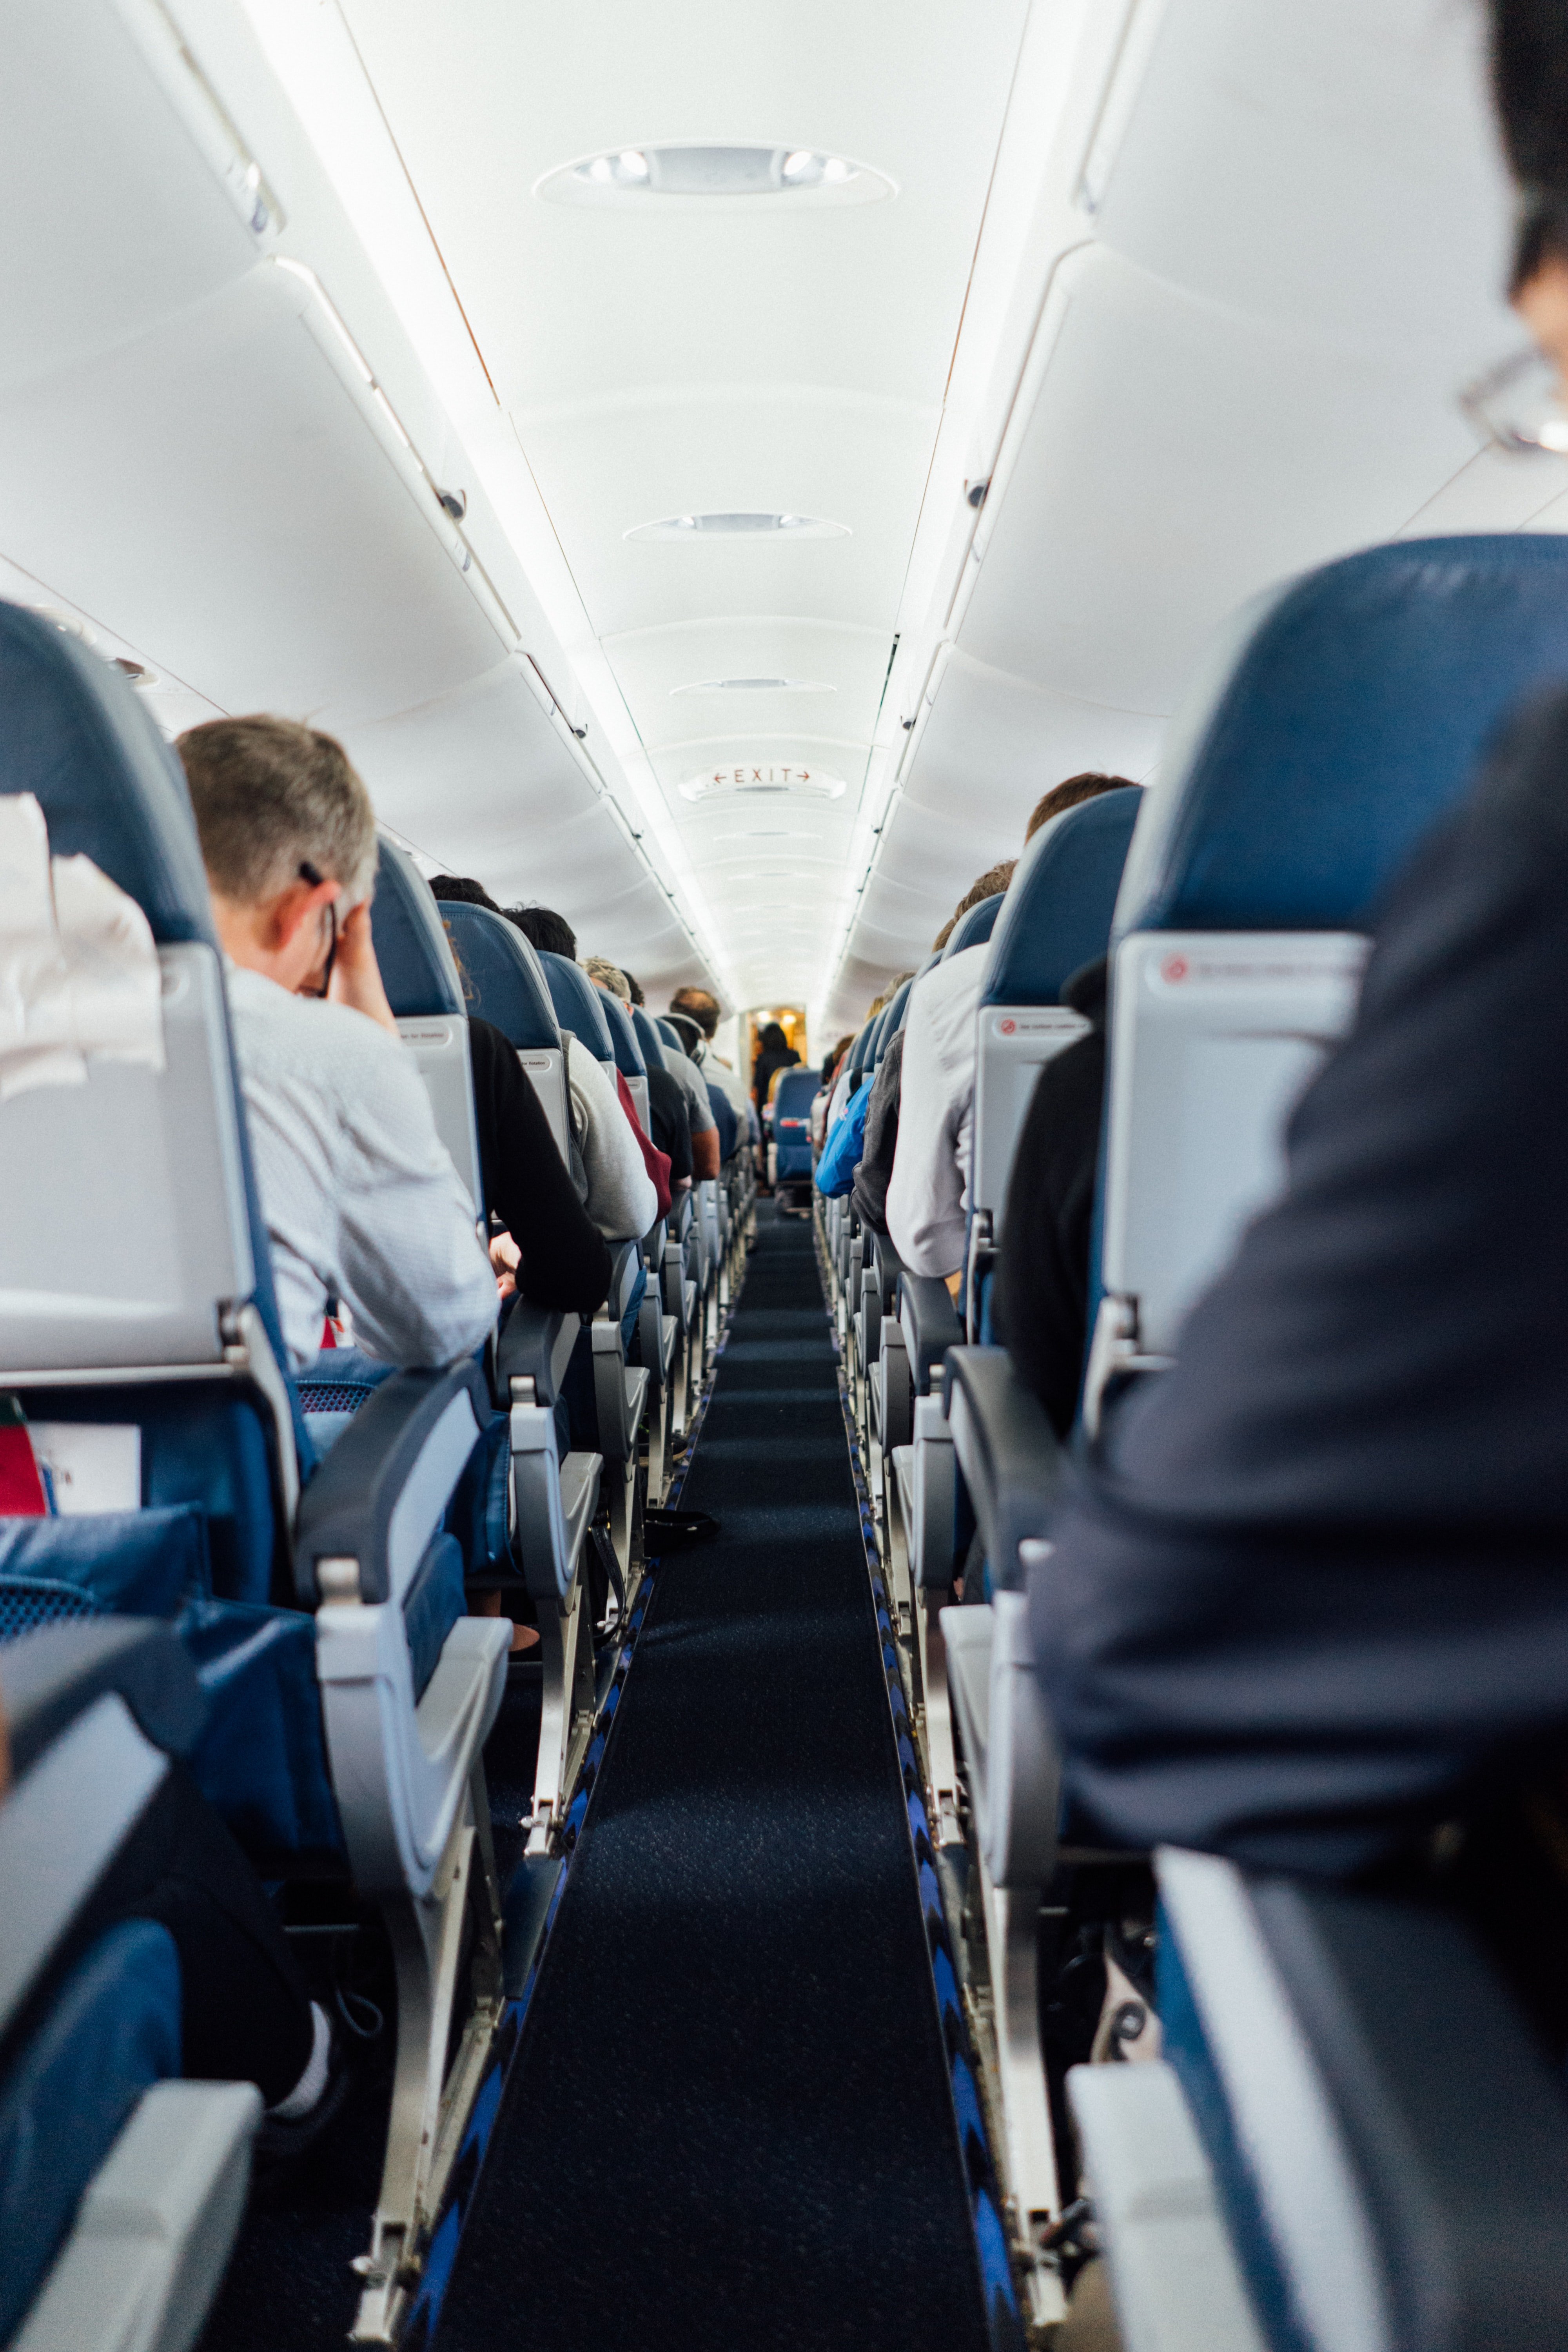 Passengers sit in an airplane waiting for take-off | Photo: Unsplash/Hanson Lu